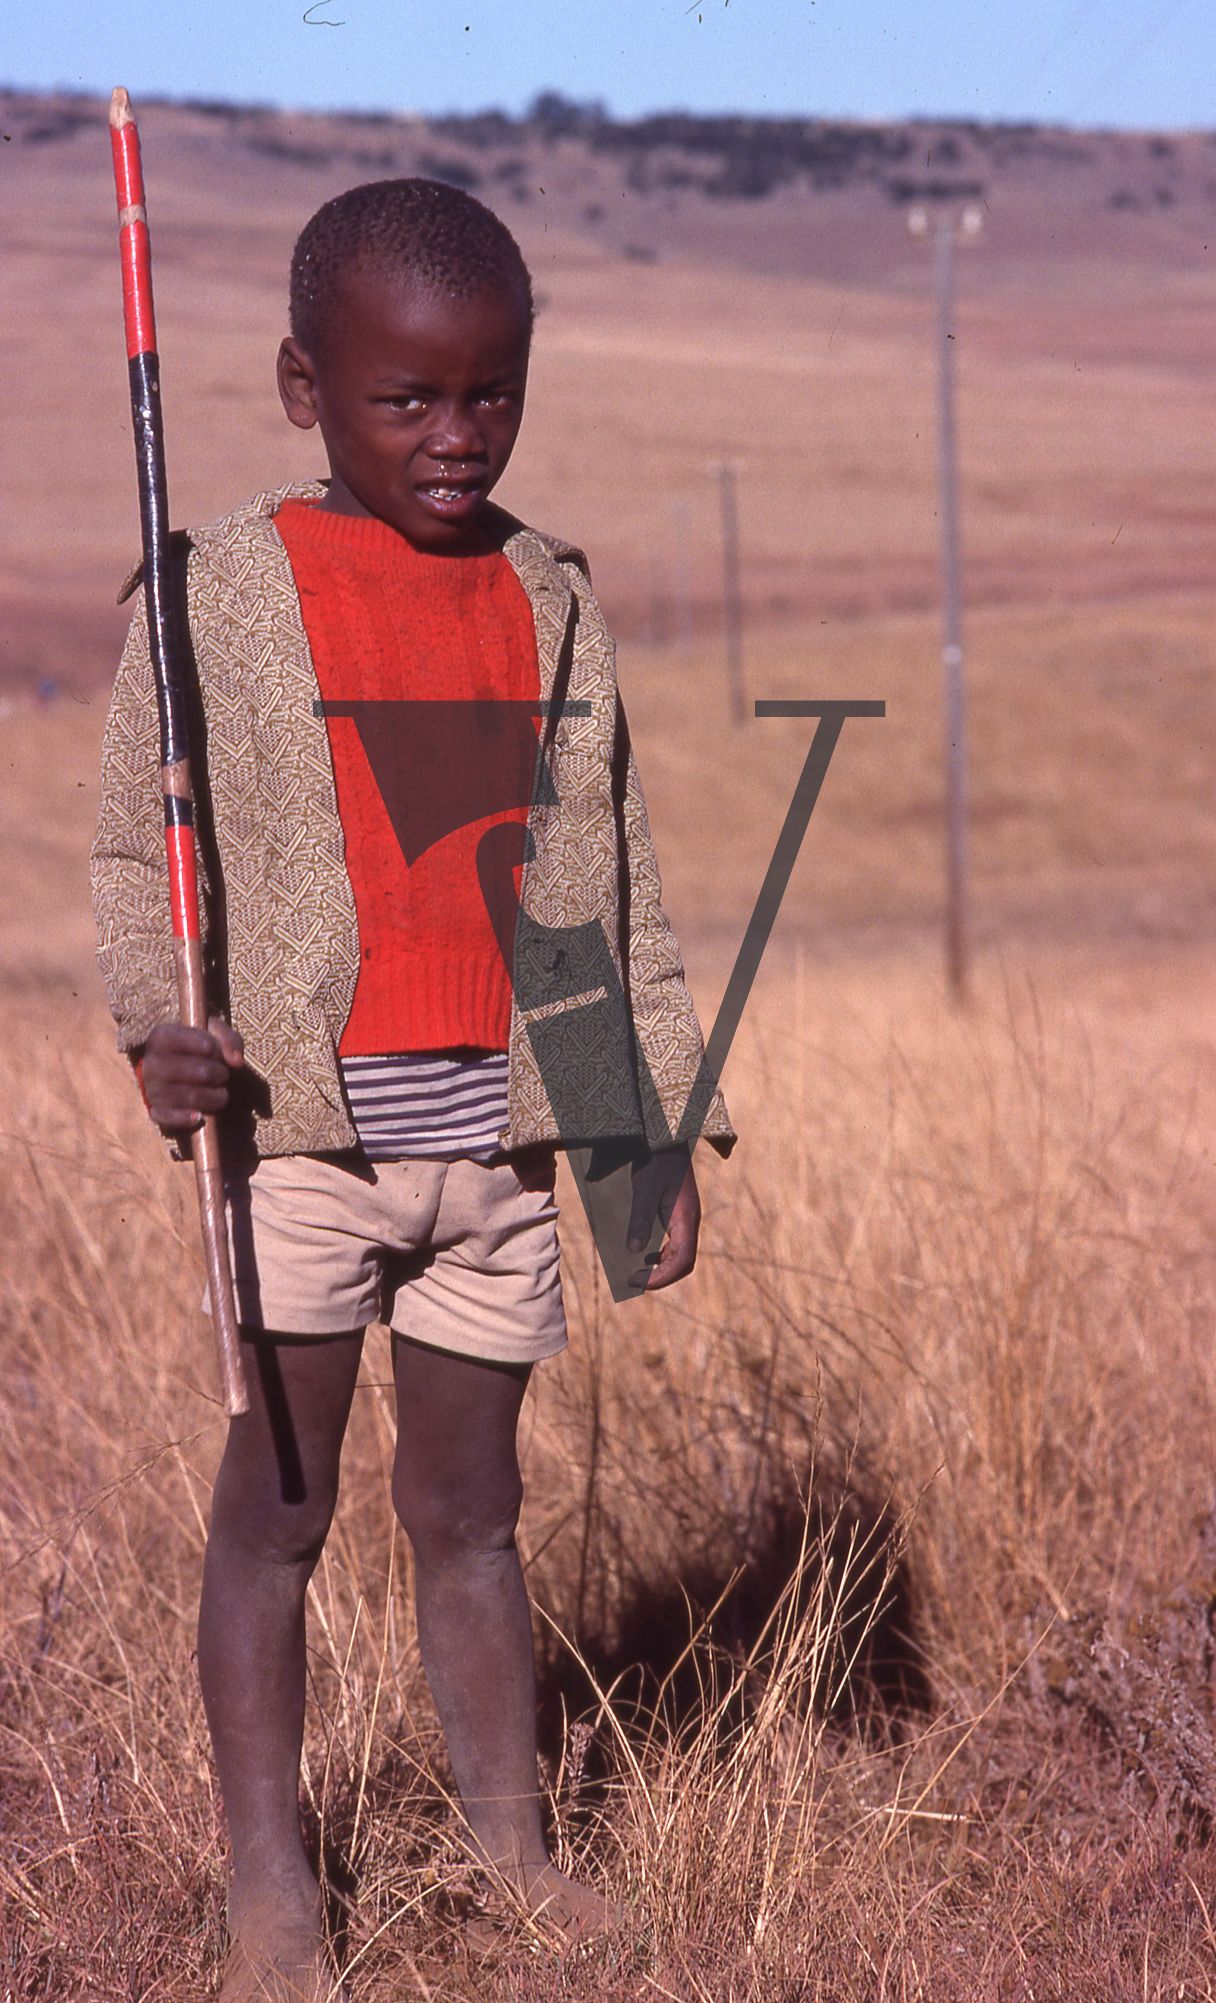 South Africa, Transkei, landscape, boy holding a staff, portrait.